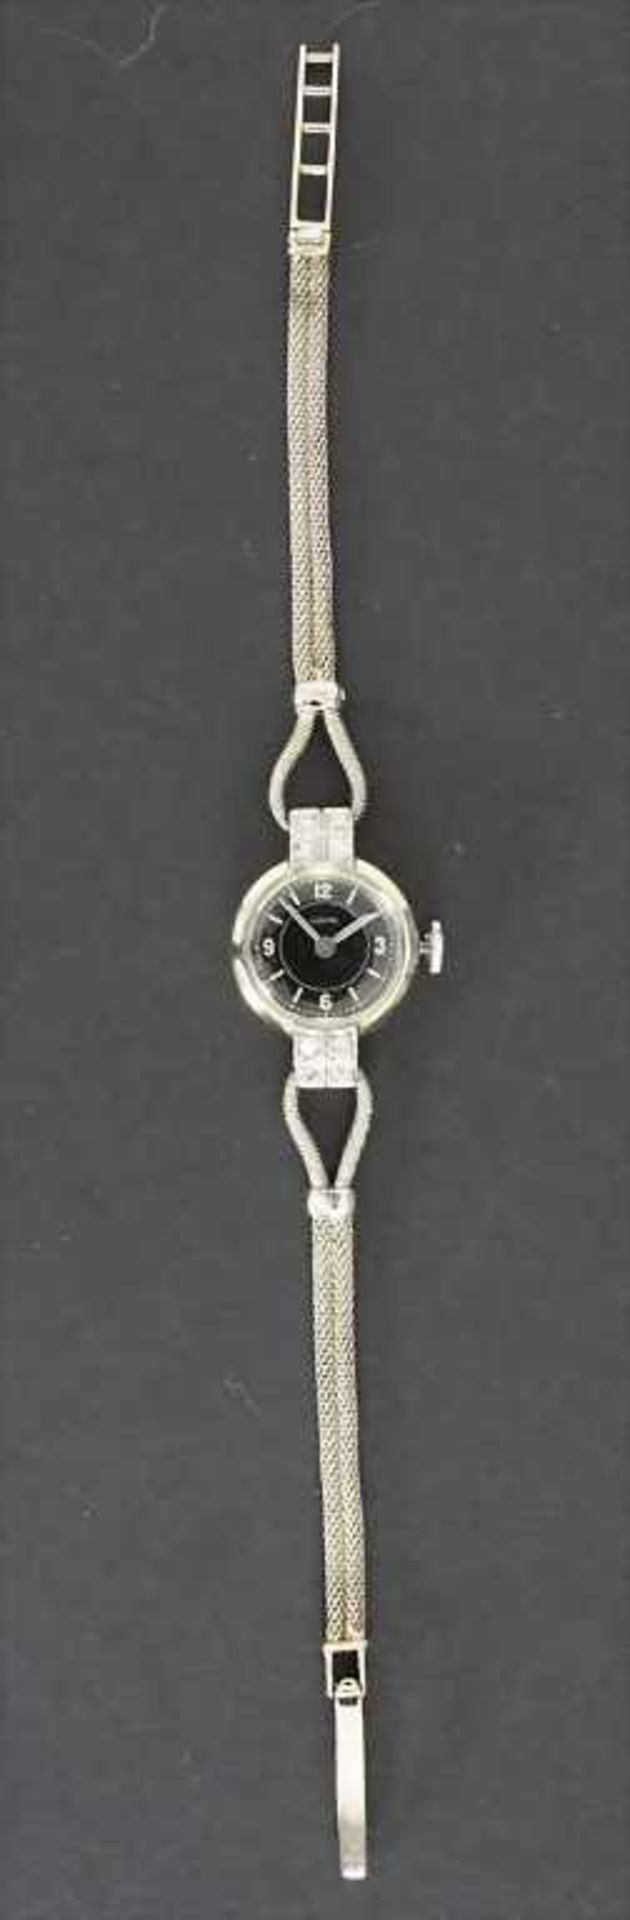 Damenarmbanduhr in Gold mit Diamanten / A ladies wristwatch in gold with diamonds, Eszeha, - Bild 2 aus 6